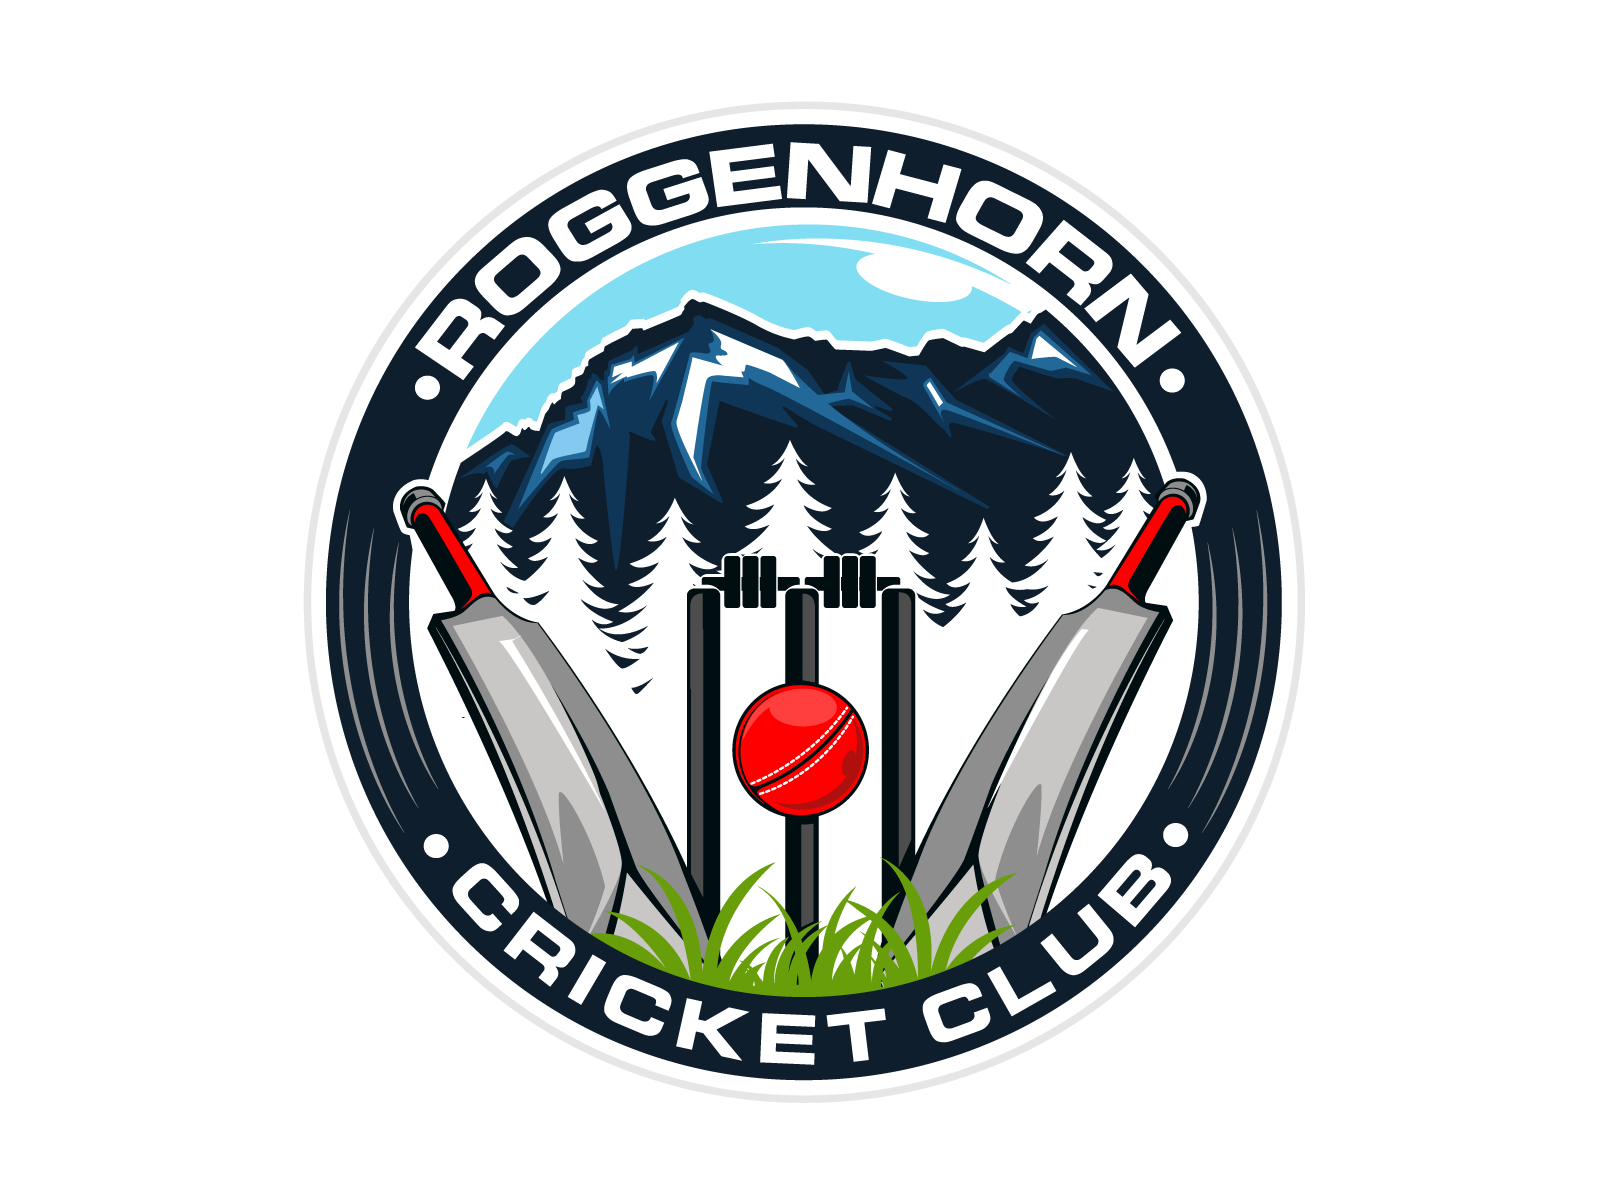 Roggenhorn Cricket Club Logo Design Freelancelogodesign Com